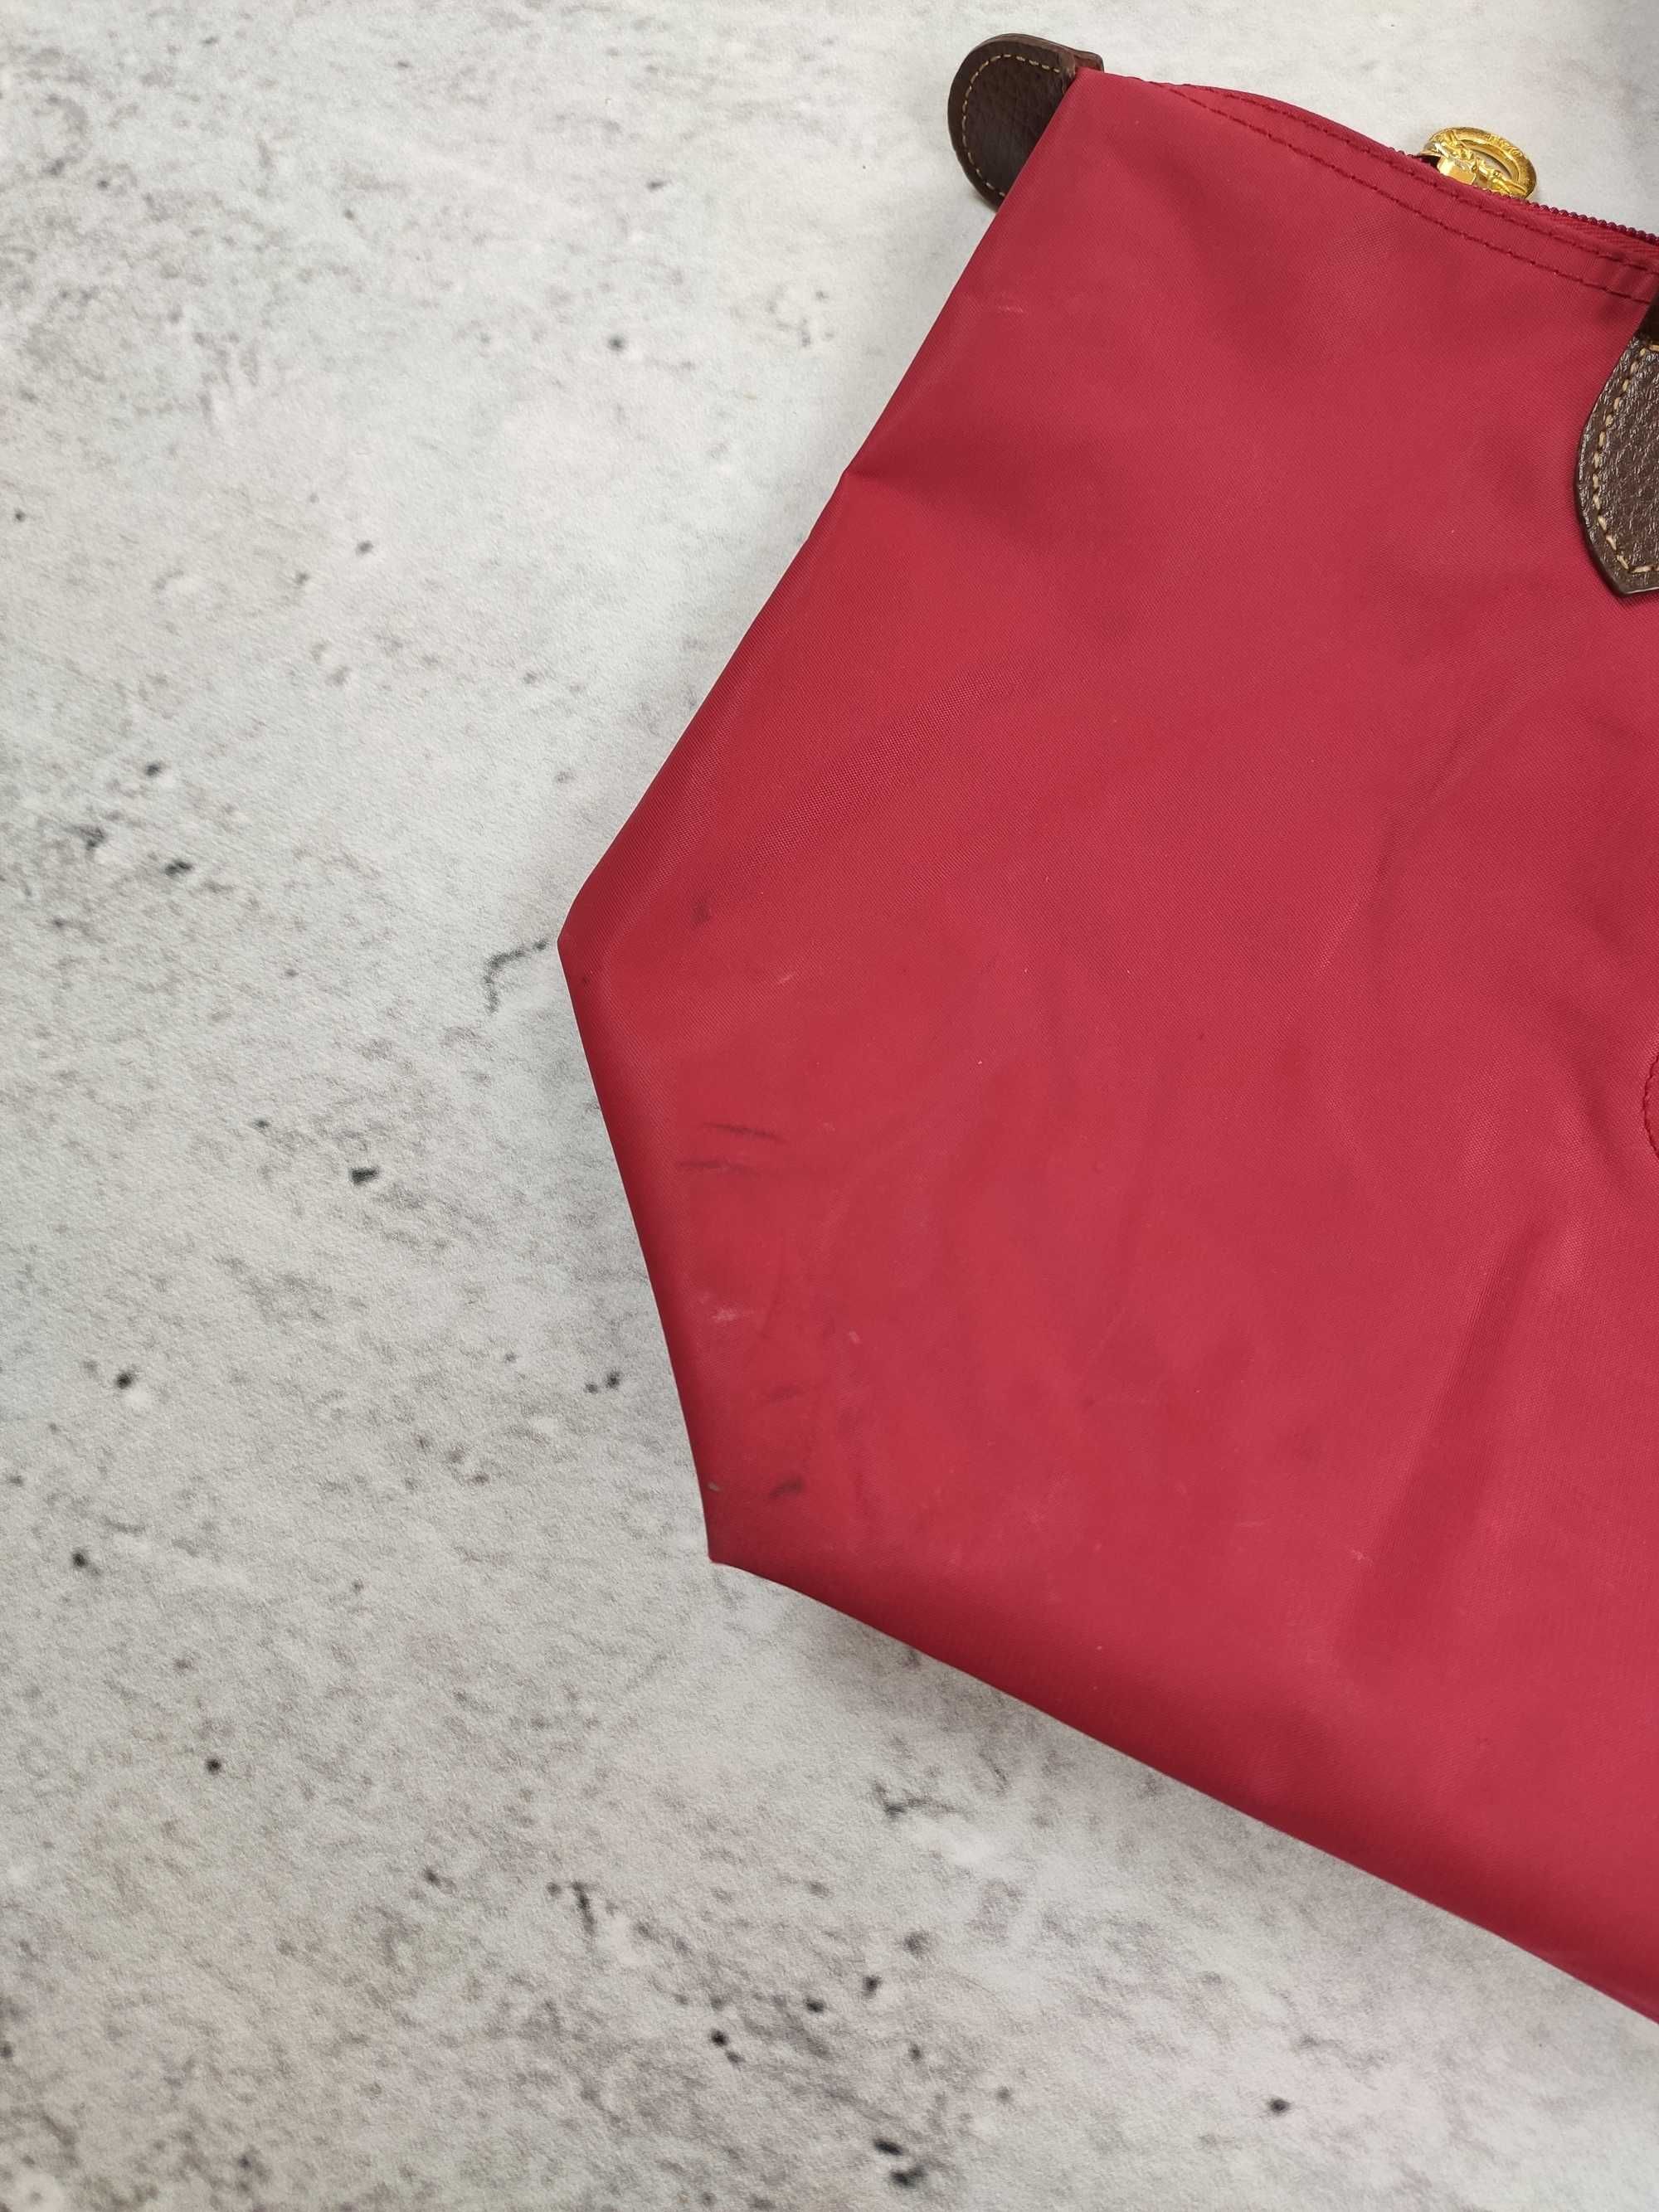 Torebka damska Longchamp Pliage czerwona elegancka